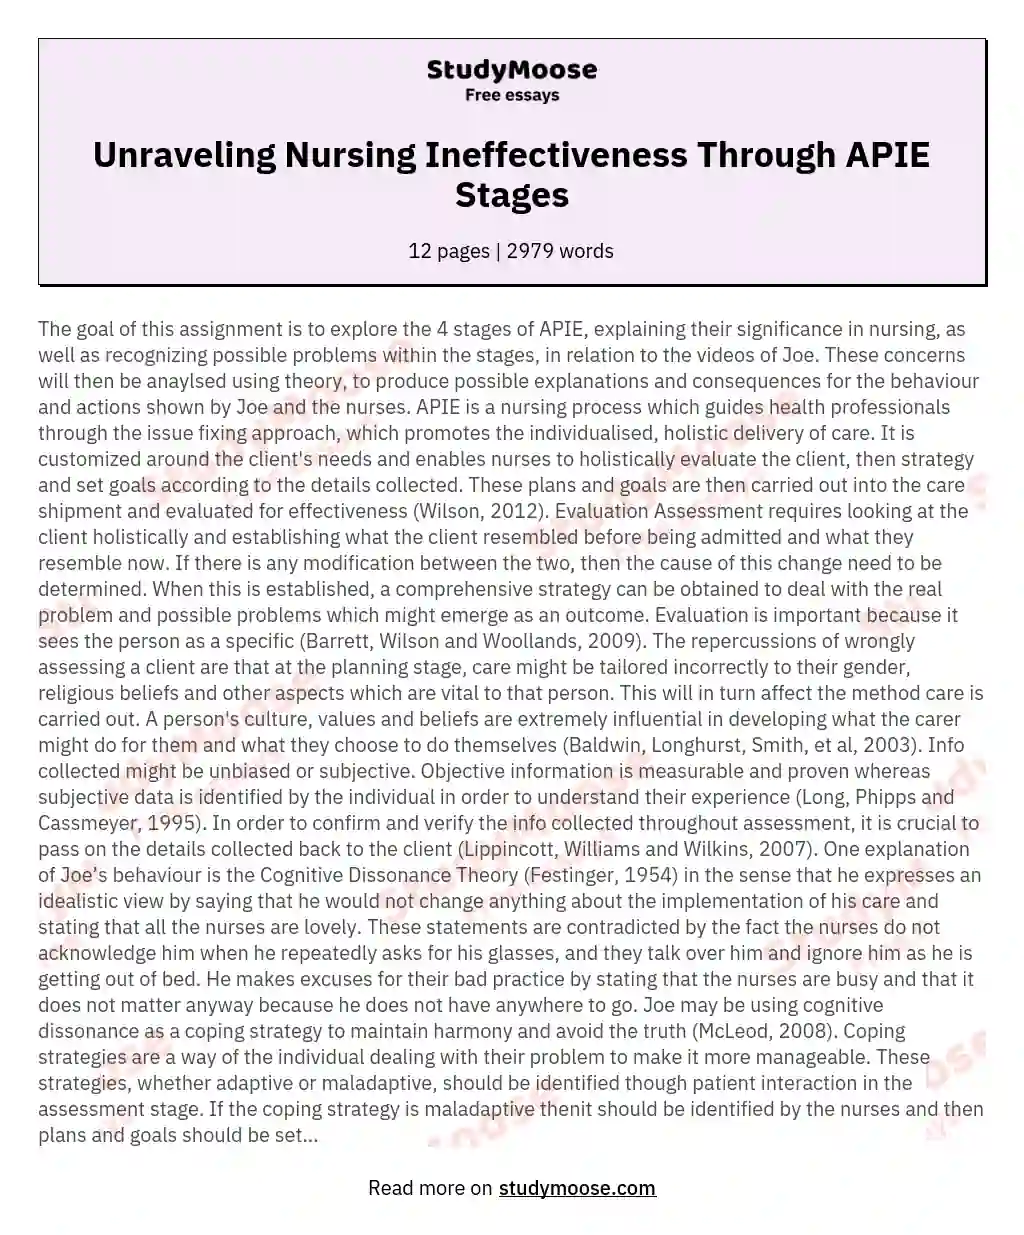 Unraveling Nursing Ineffectiveness Through APIE Stages essay